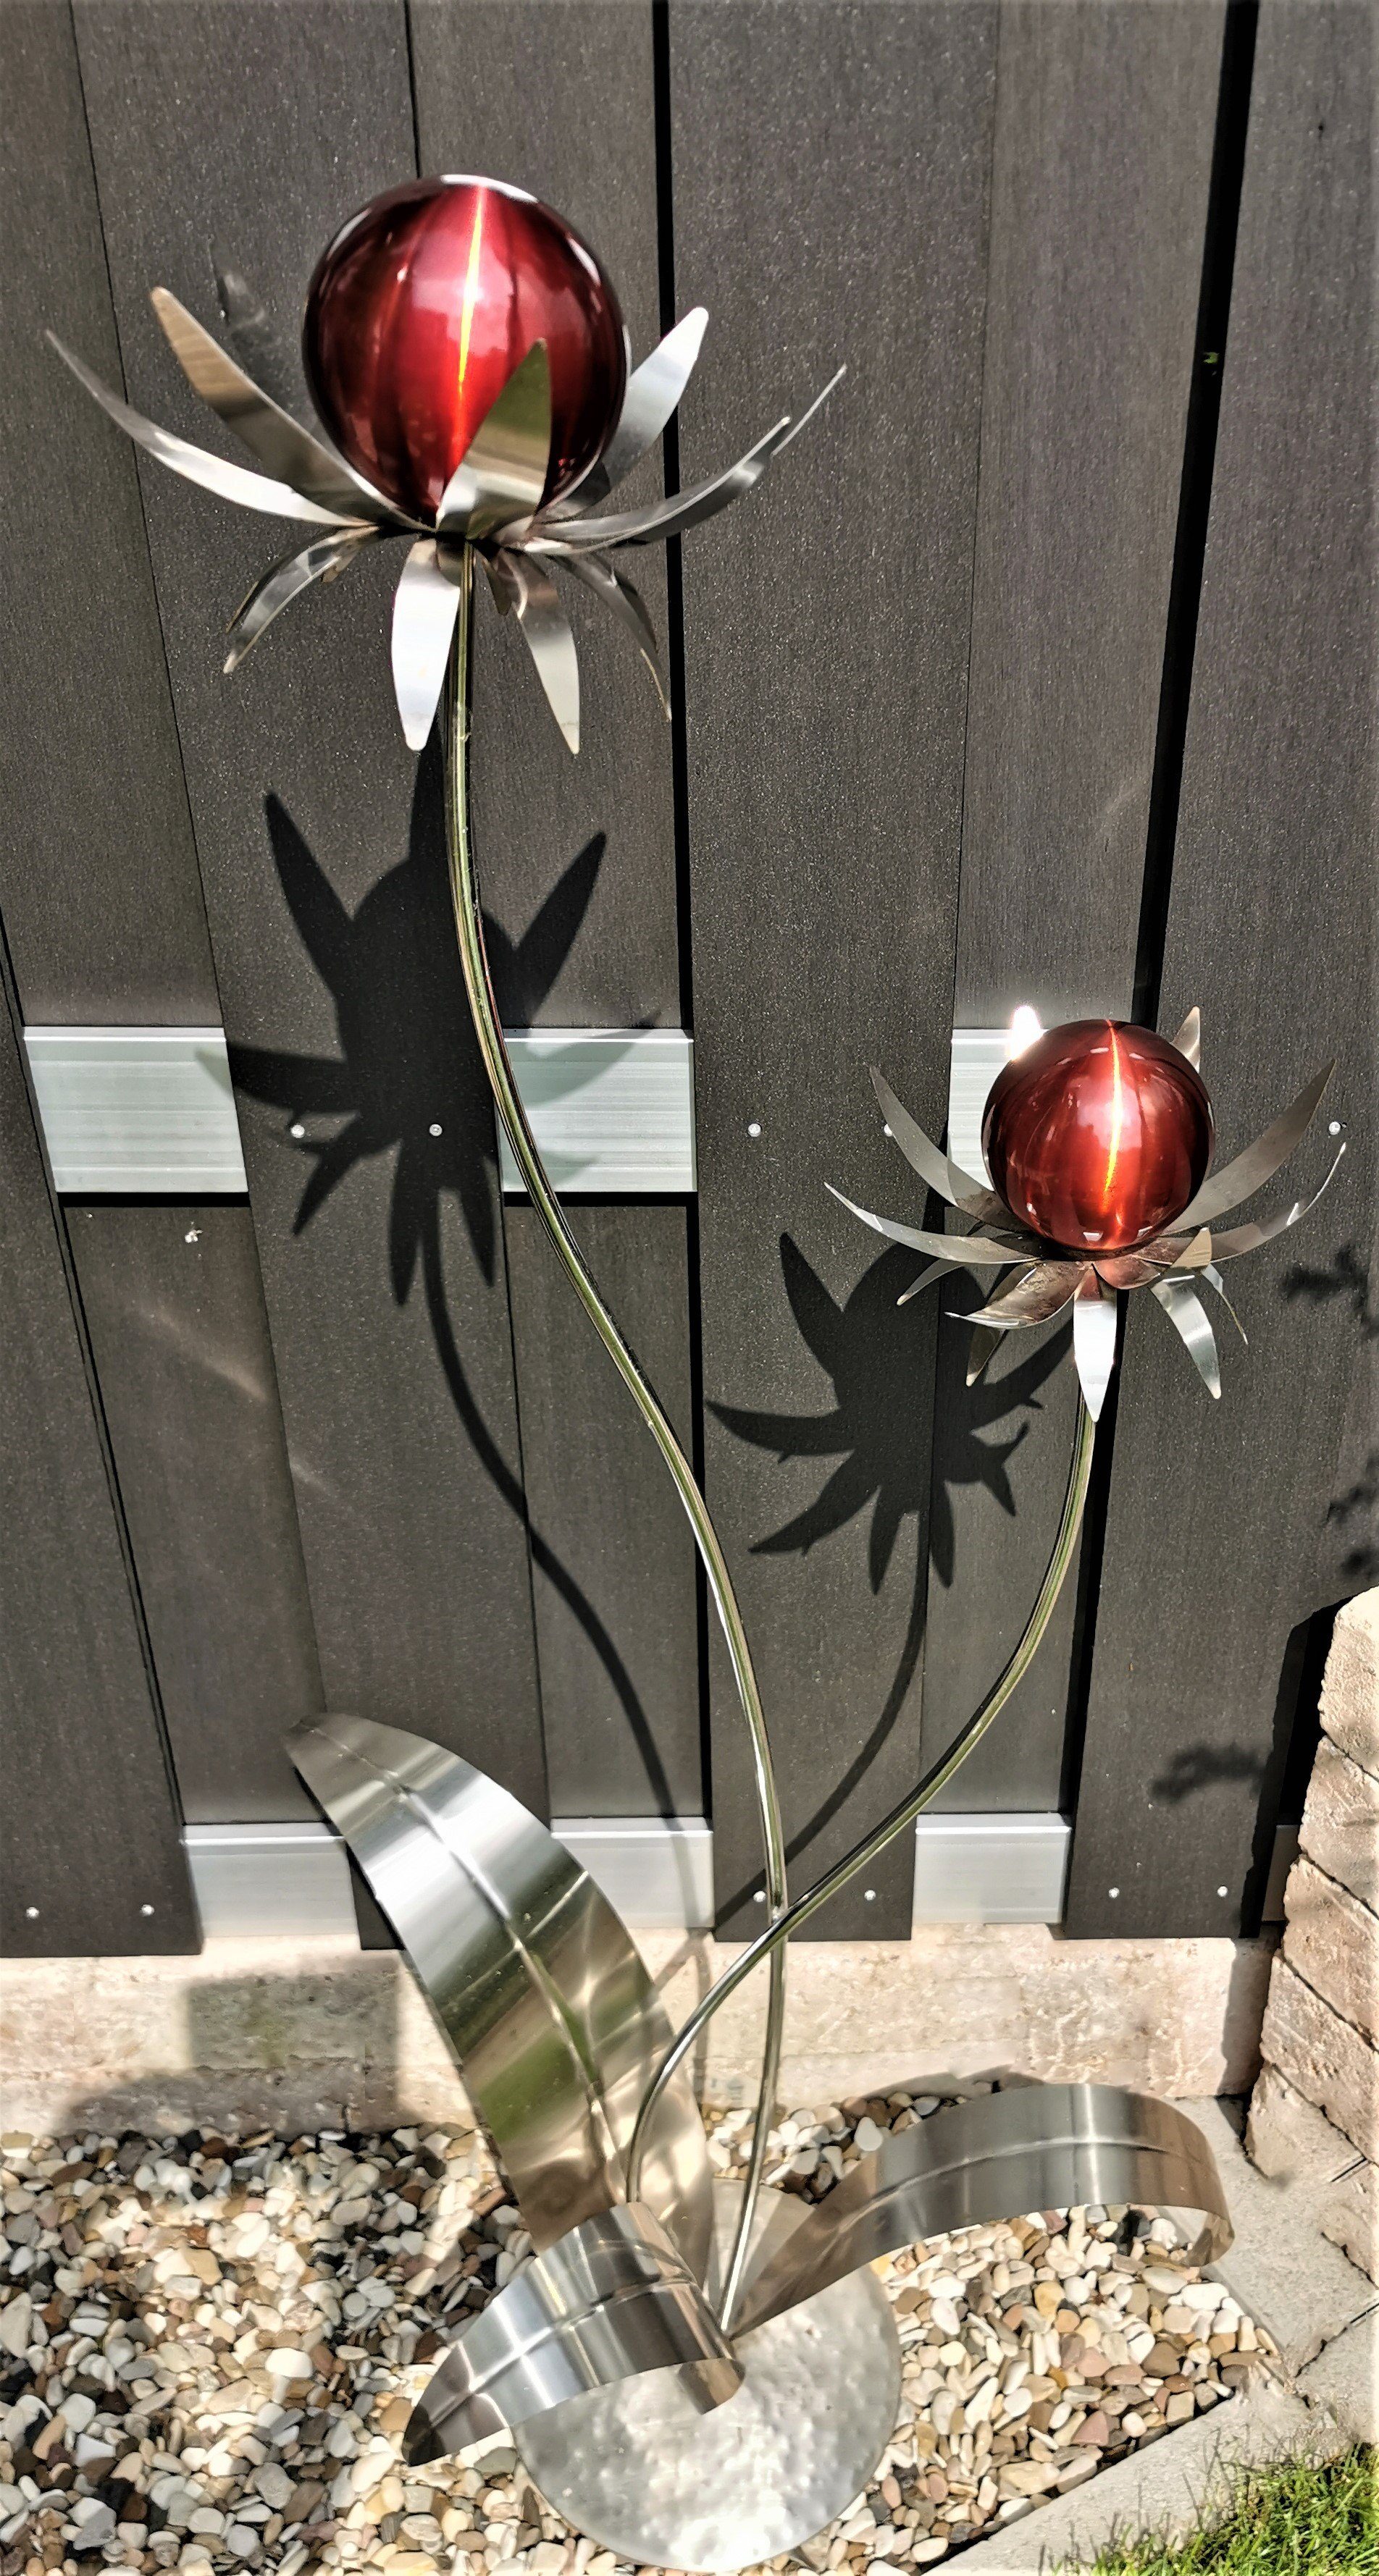 Jürgen Bocker Garten-Ambiente Gartenstecker Skulptur Blume Milano Edelstahl 120cm Kugel rot matt gebürstet Standfuß Gartendeko